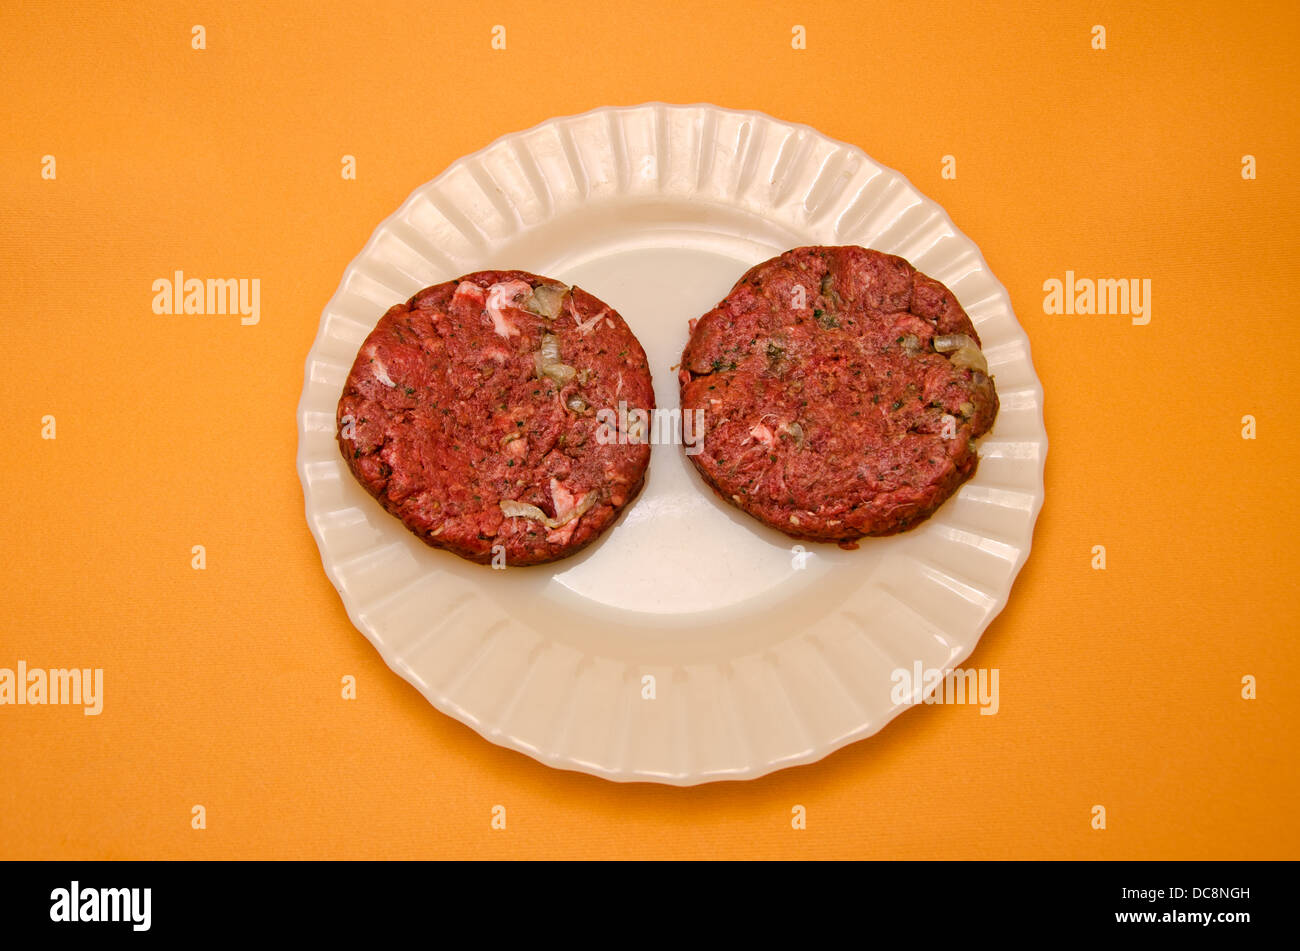 Dish with raw hamburgers Stock Photo